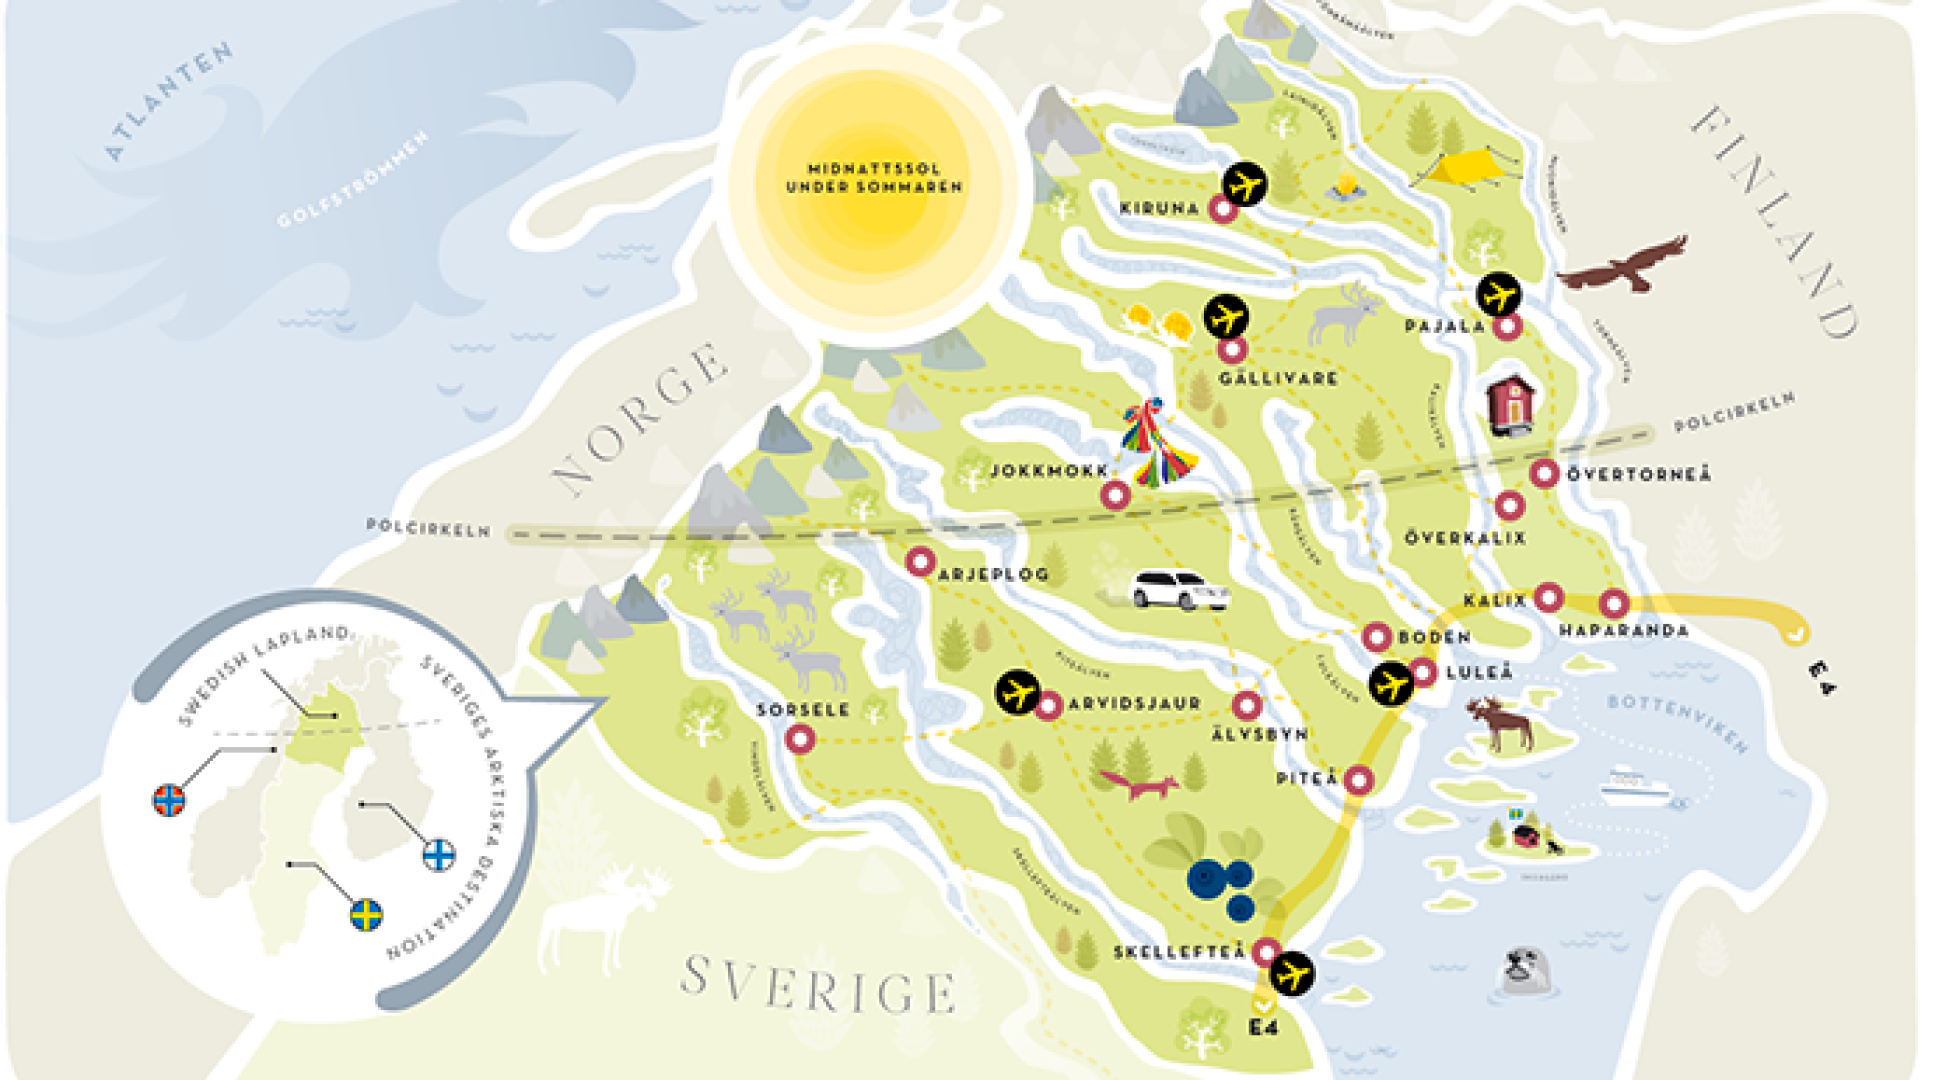 The Midnight Sun - Swedish Tourist Association